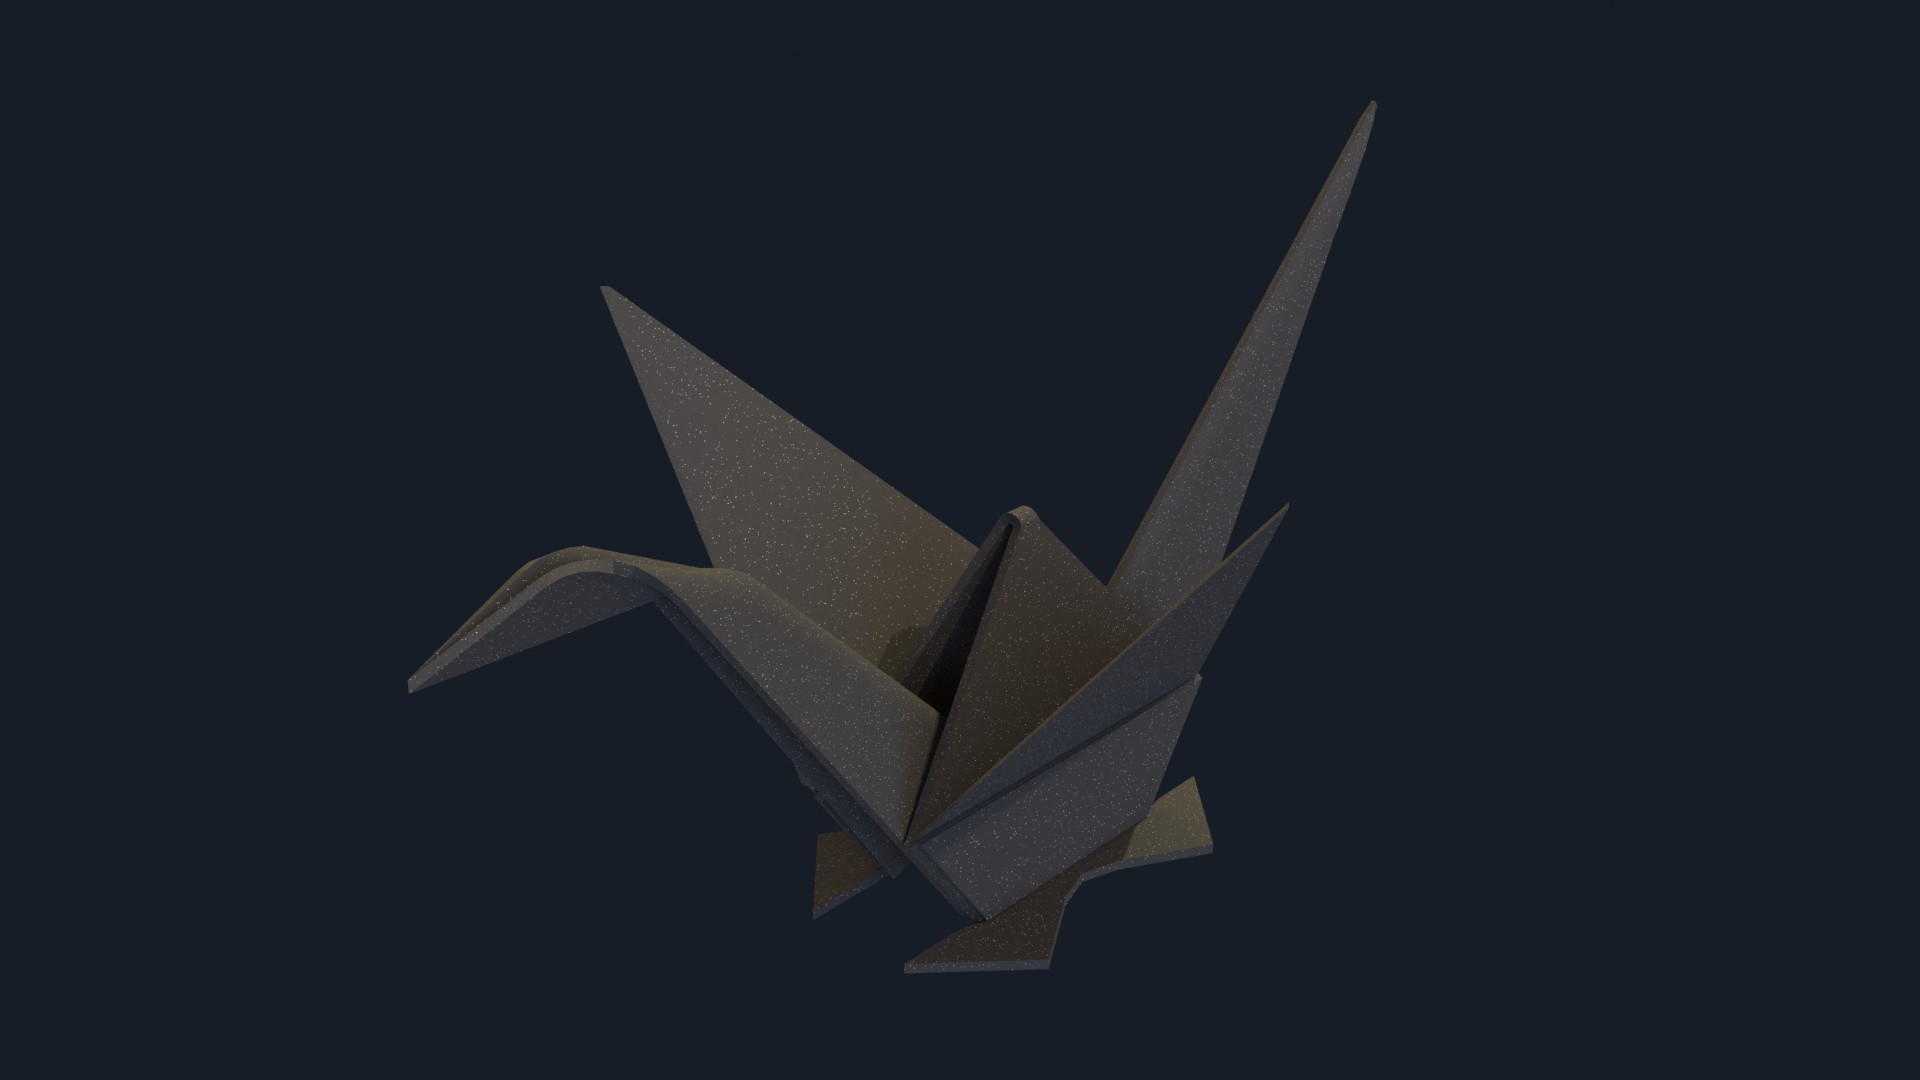 Origami like crane